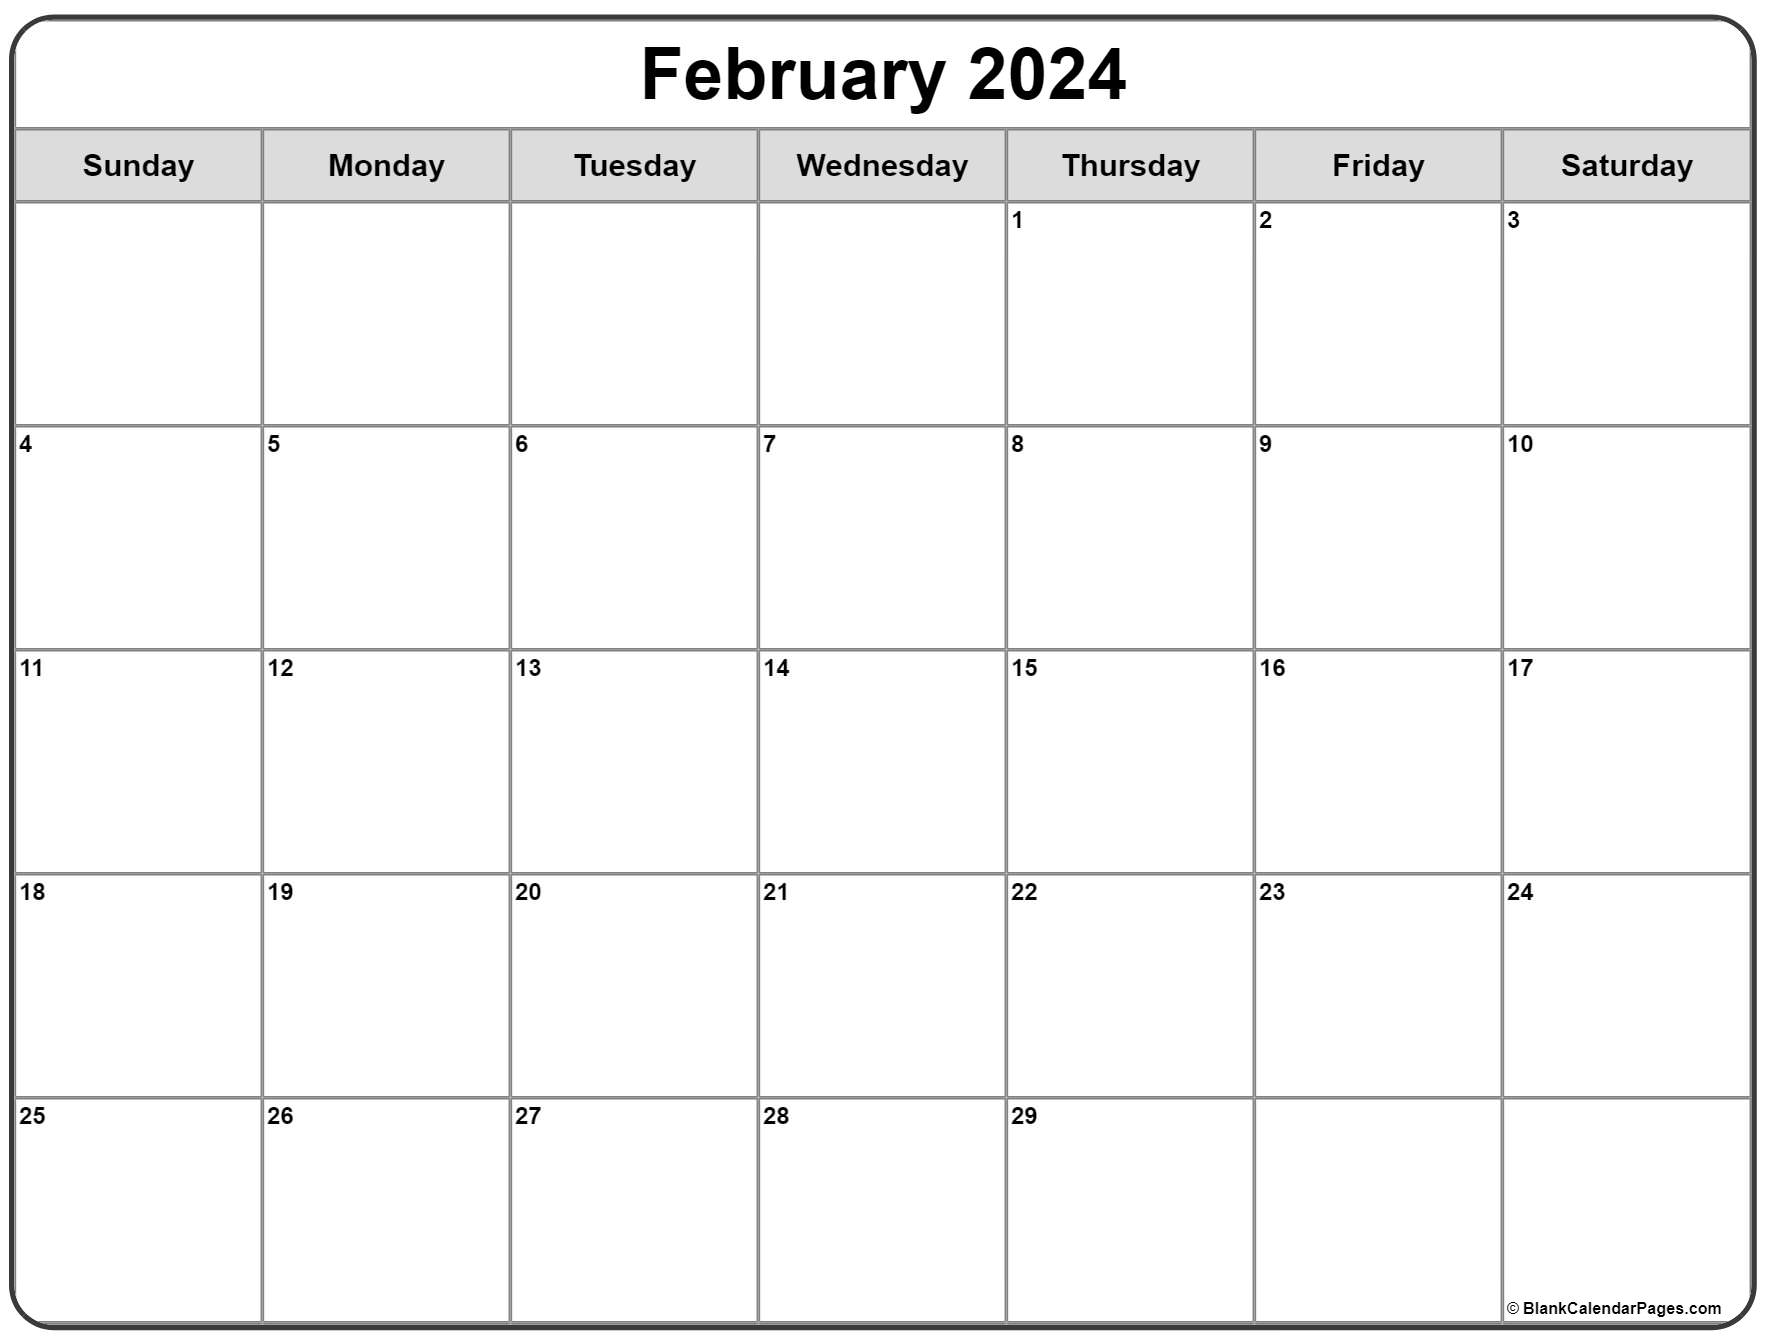 February 2022 Calendar Printable Free February 2022 Calendar | Free Printable Calendar Templates